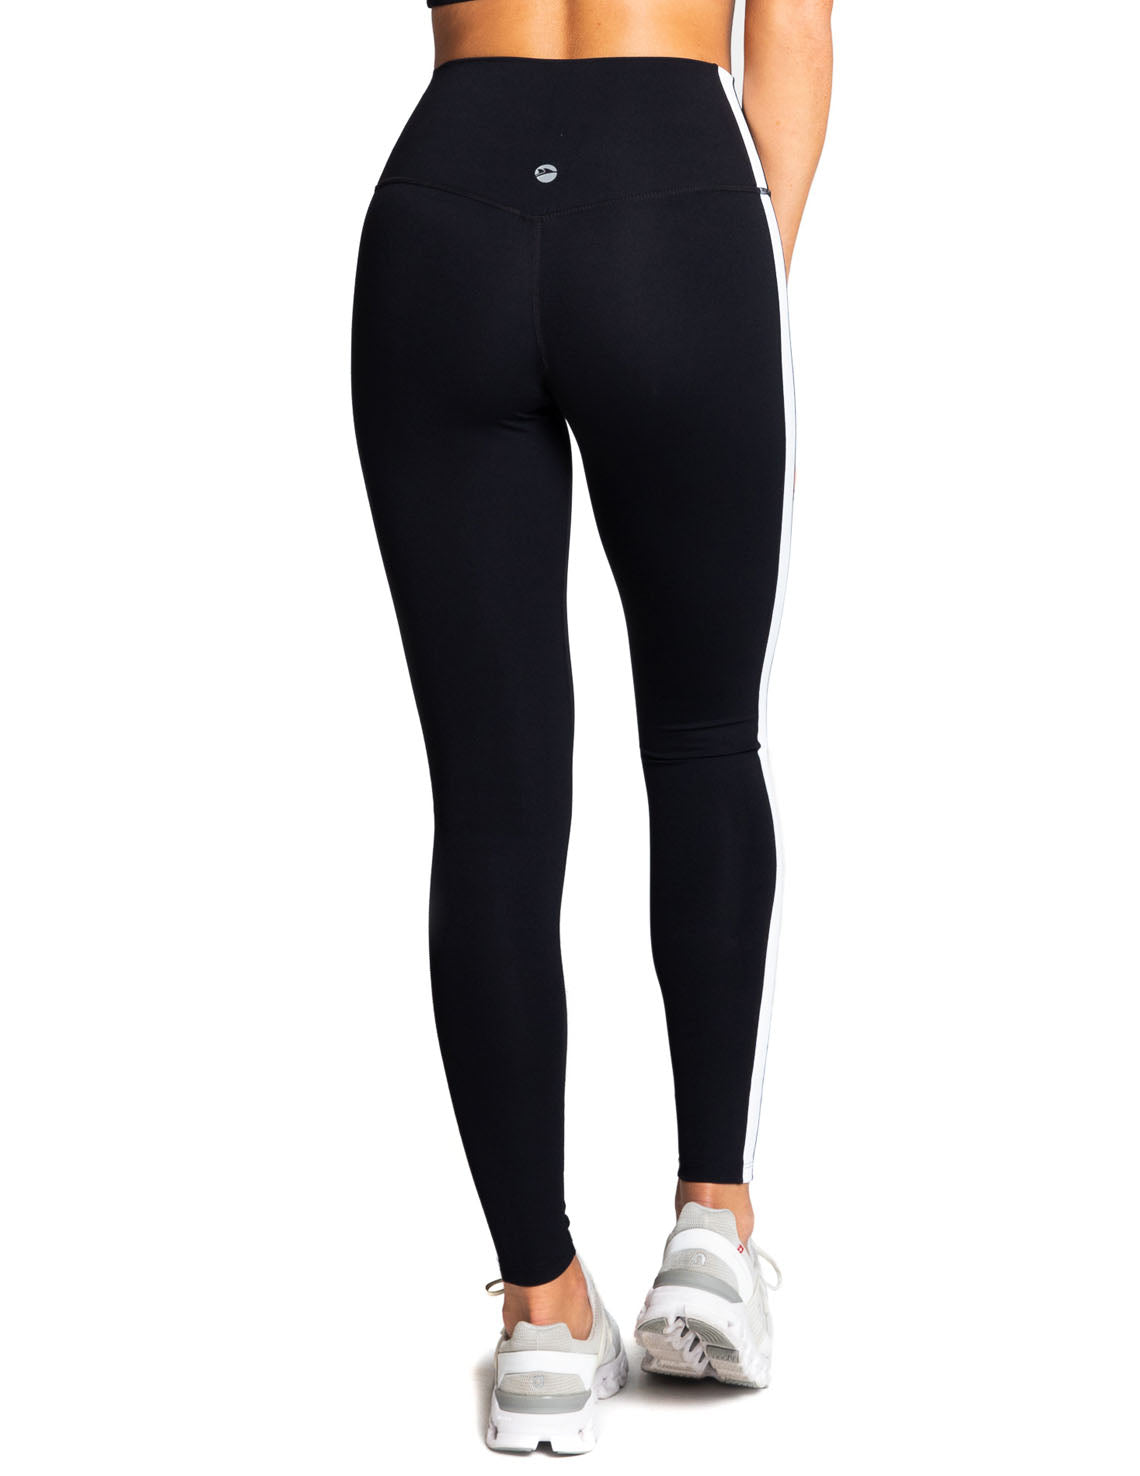 Xersion Womens Black White Activewear Sportswear Leggings Size L Size L -  $11 - From LimenDime